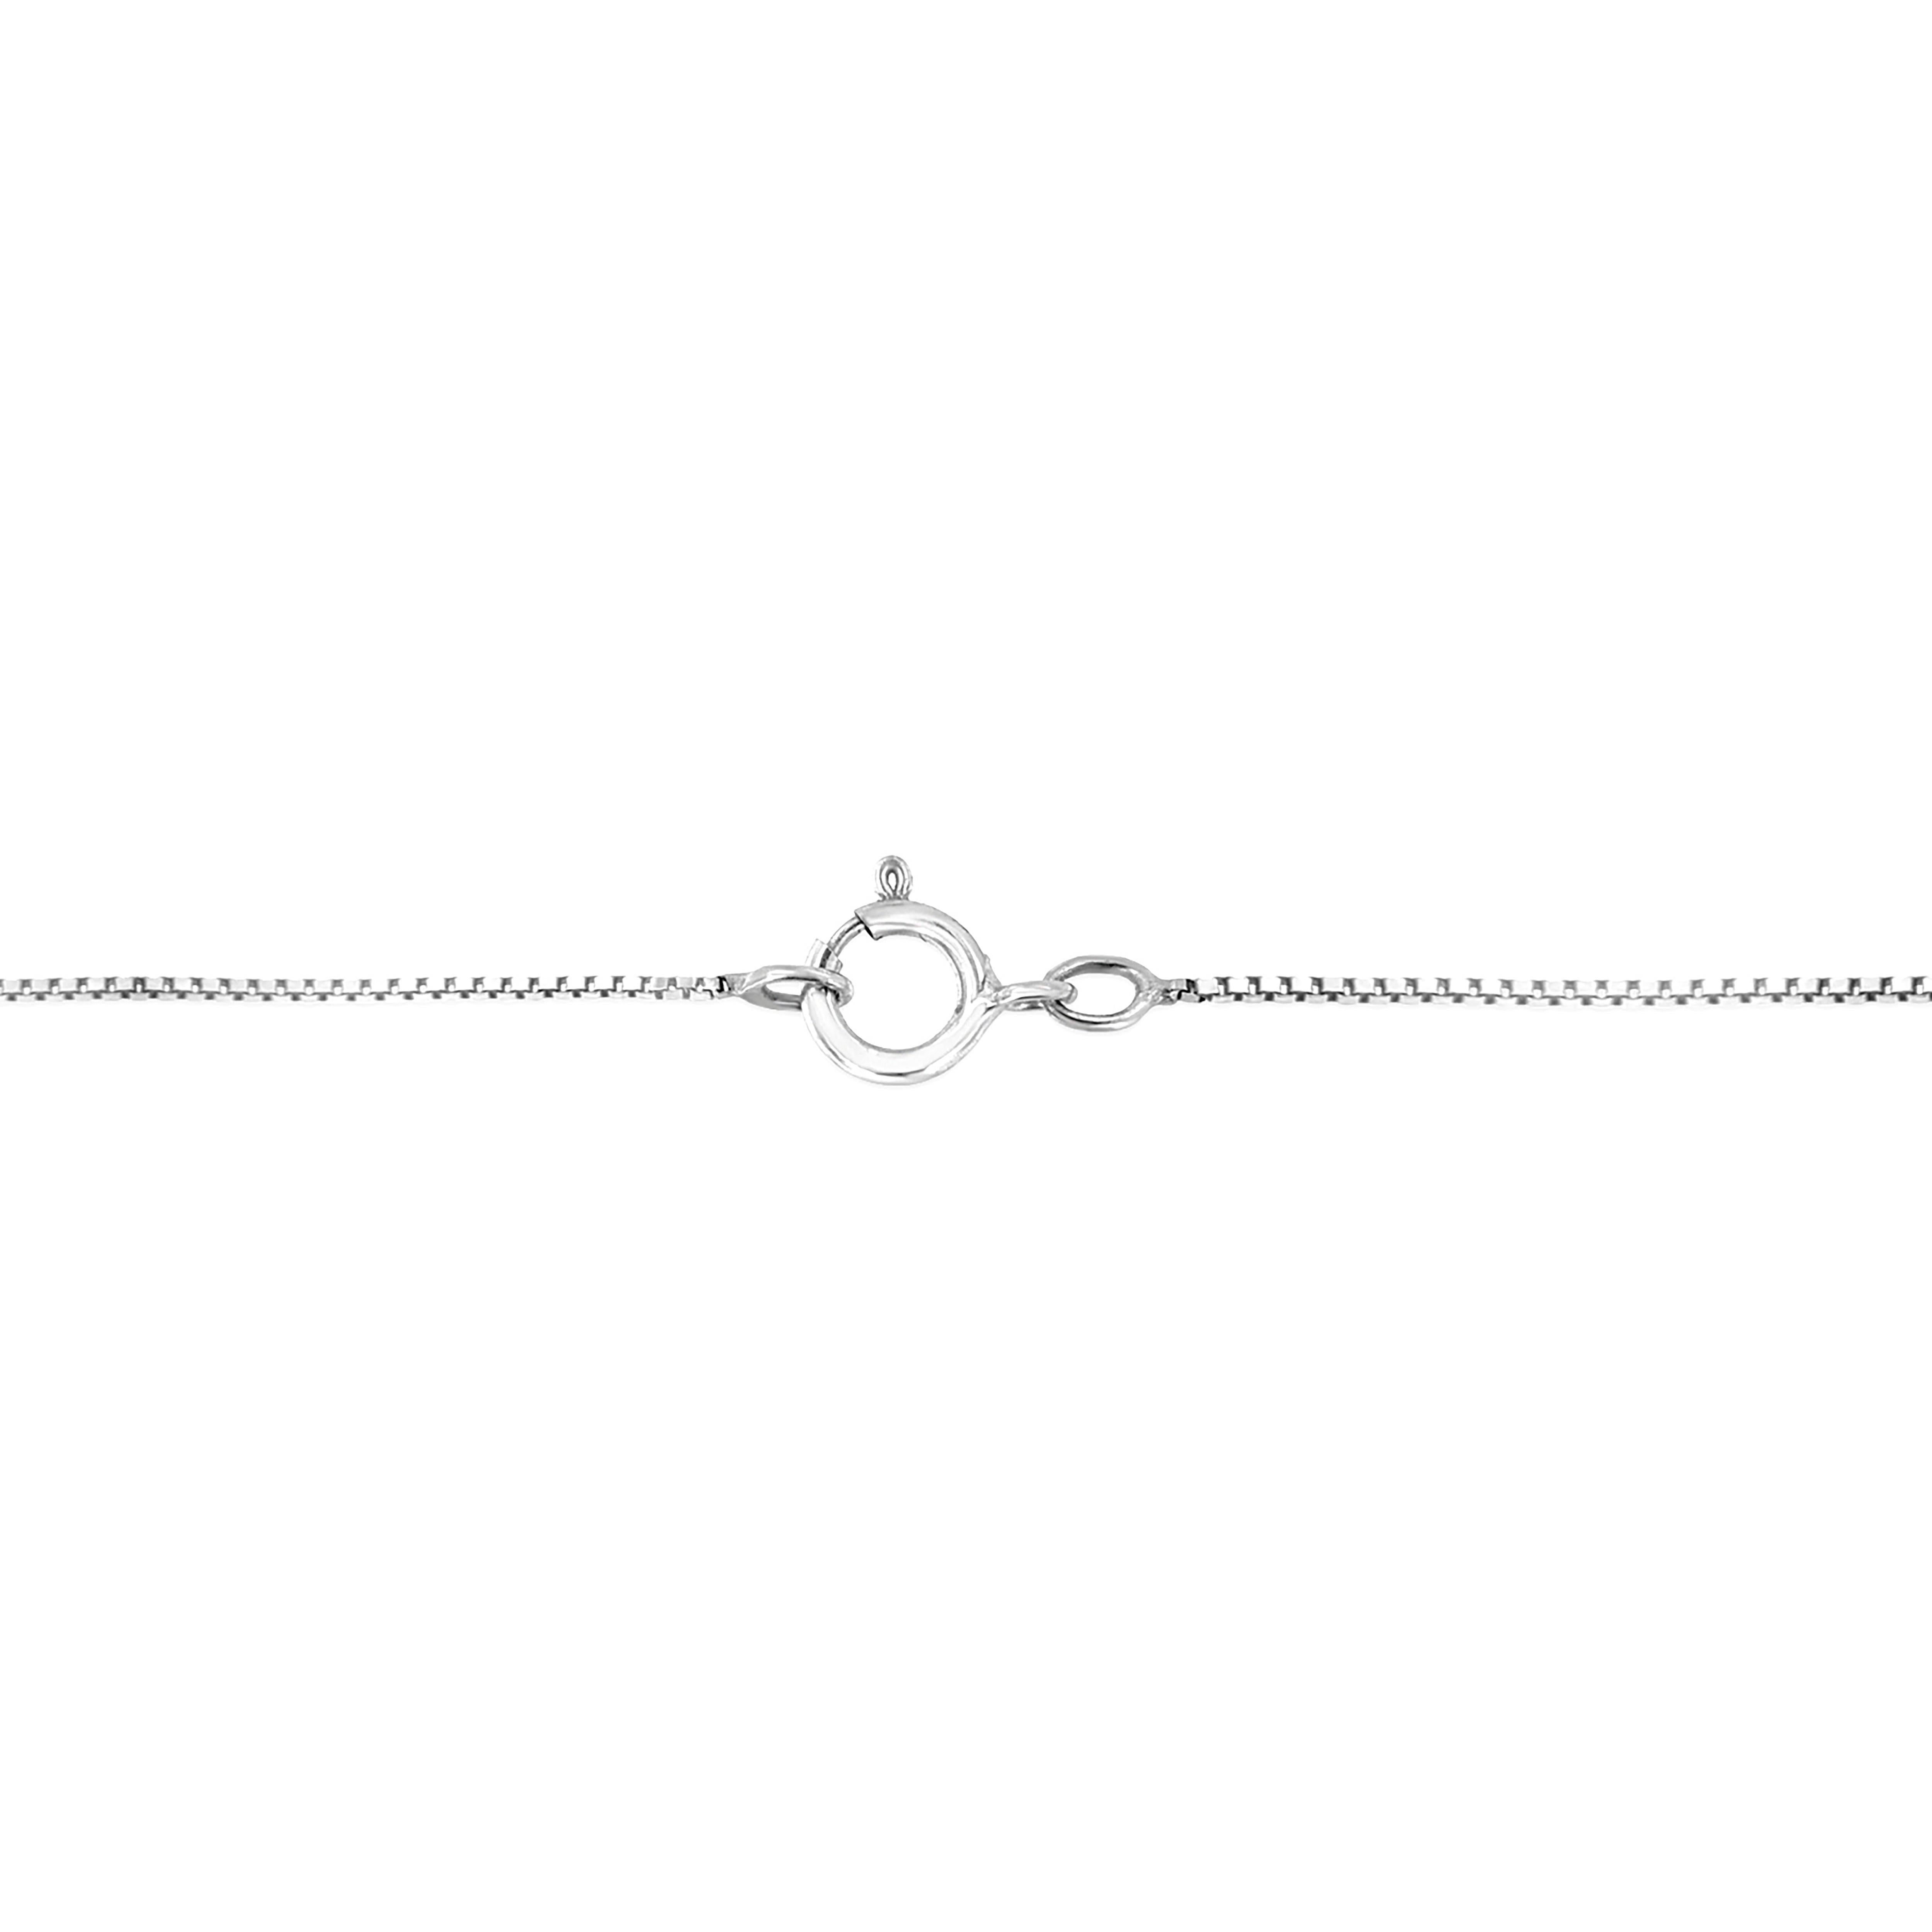 Contemporary 18K White Gold 5/8 Carat Round Diamond Halo Heart Cluster Pendant Necklace